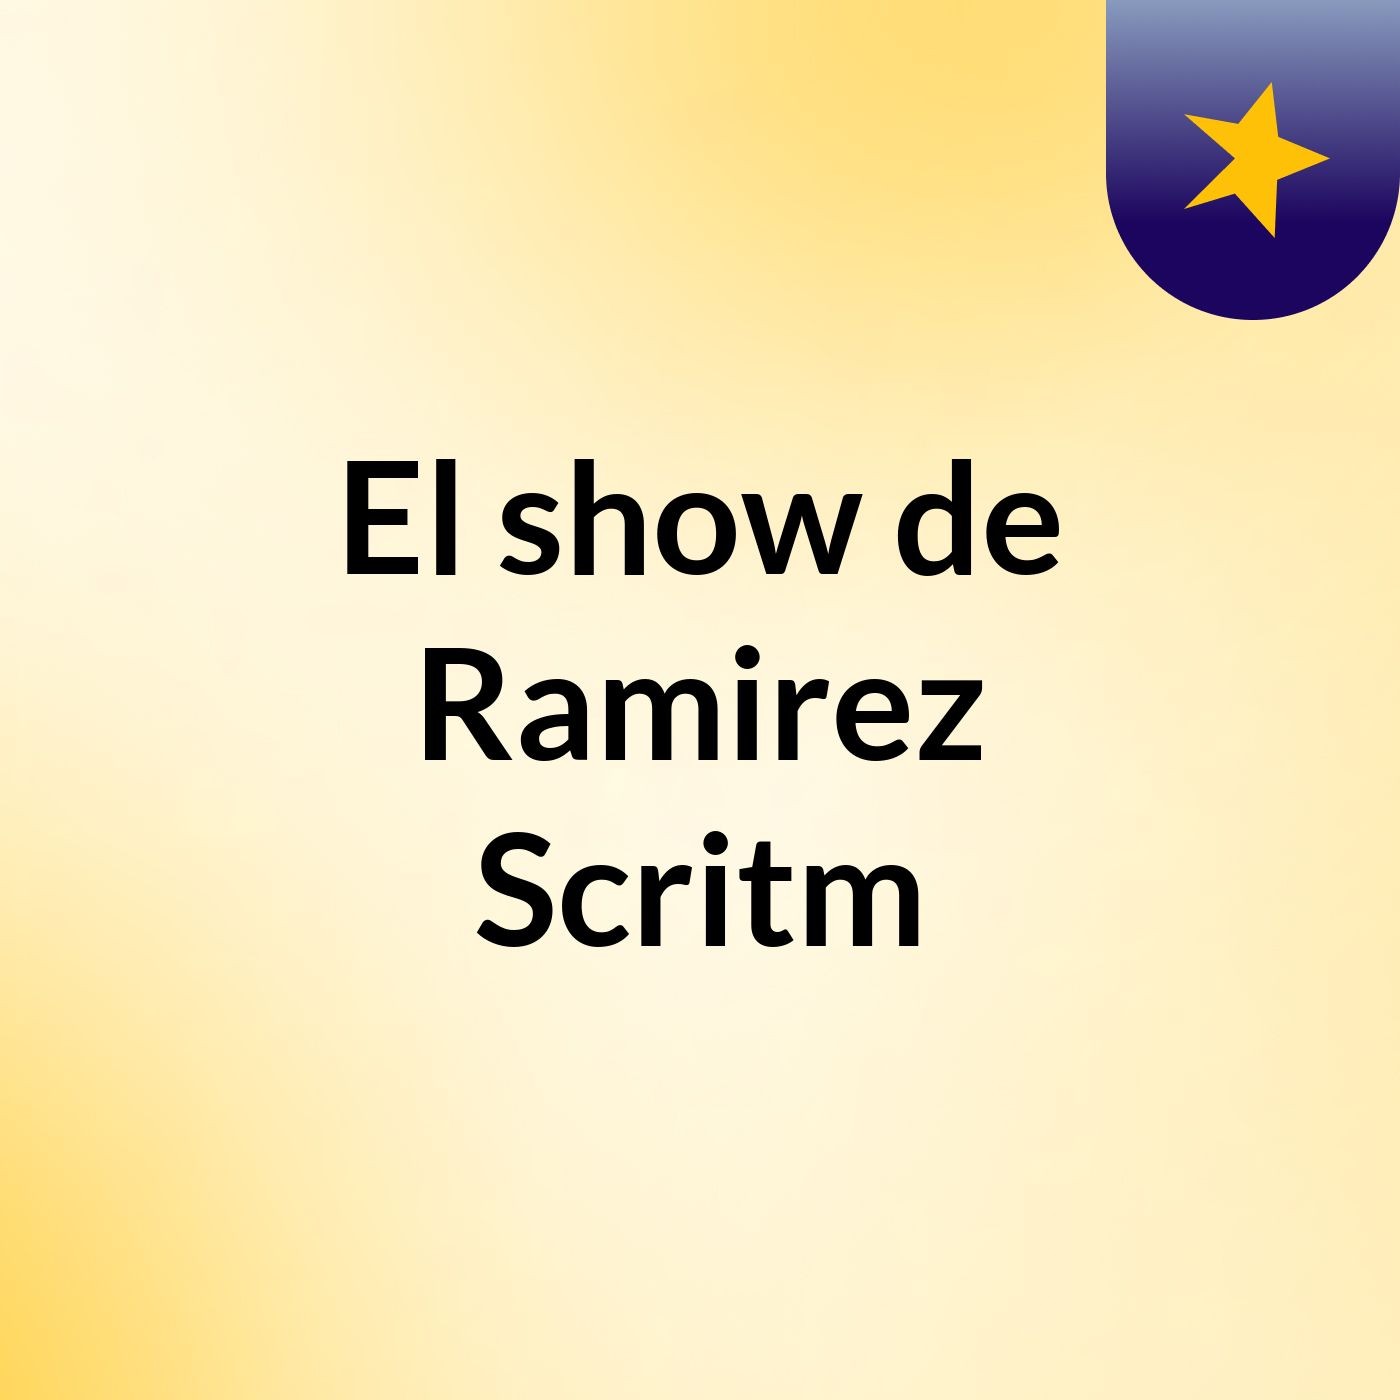 El show de Ramirez Scritm